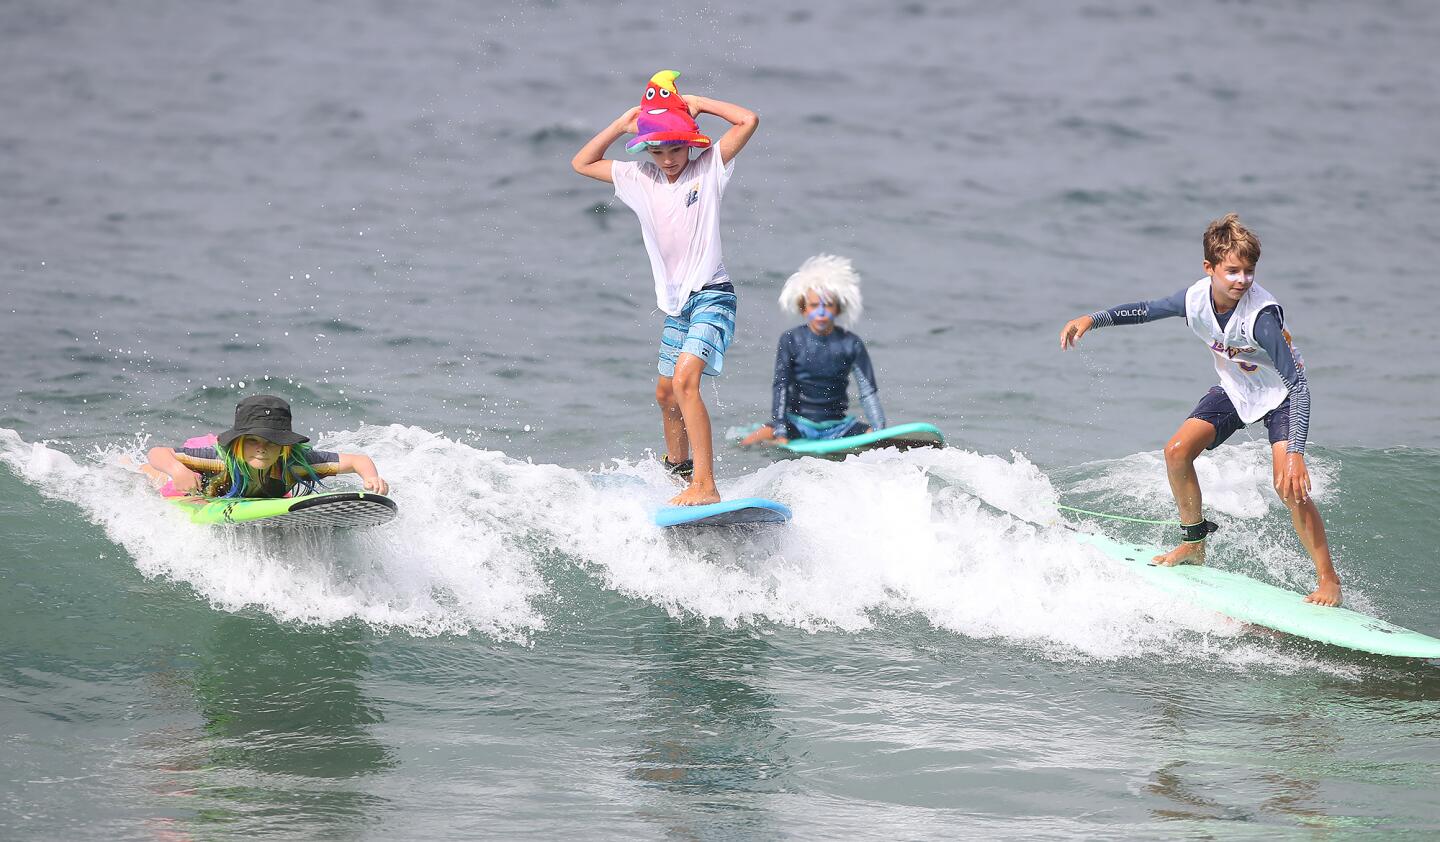 Kids ride the foam dressed as emojis during the Laguna Beach Surf School summer camp Friday in Laguna Beach.